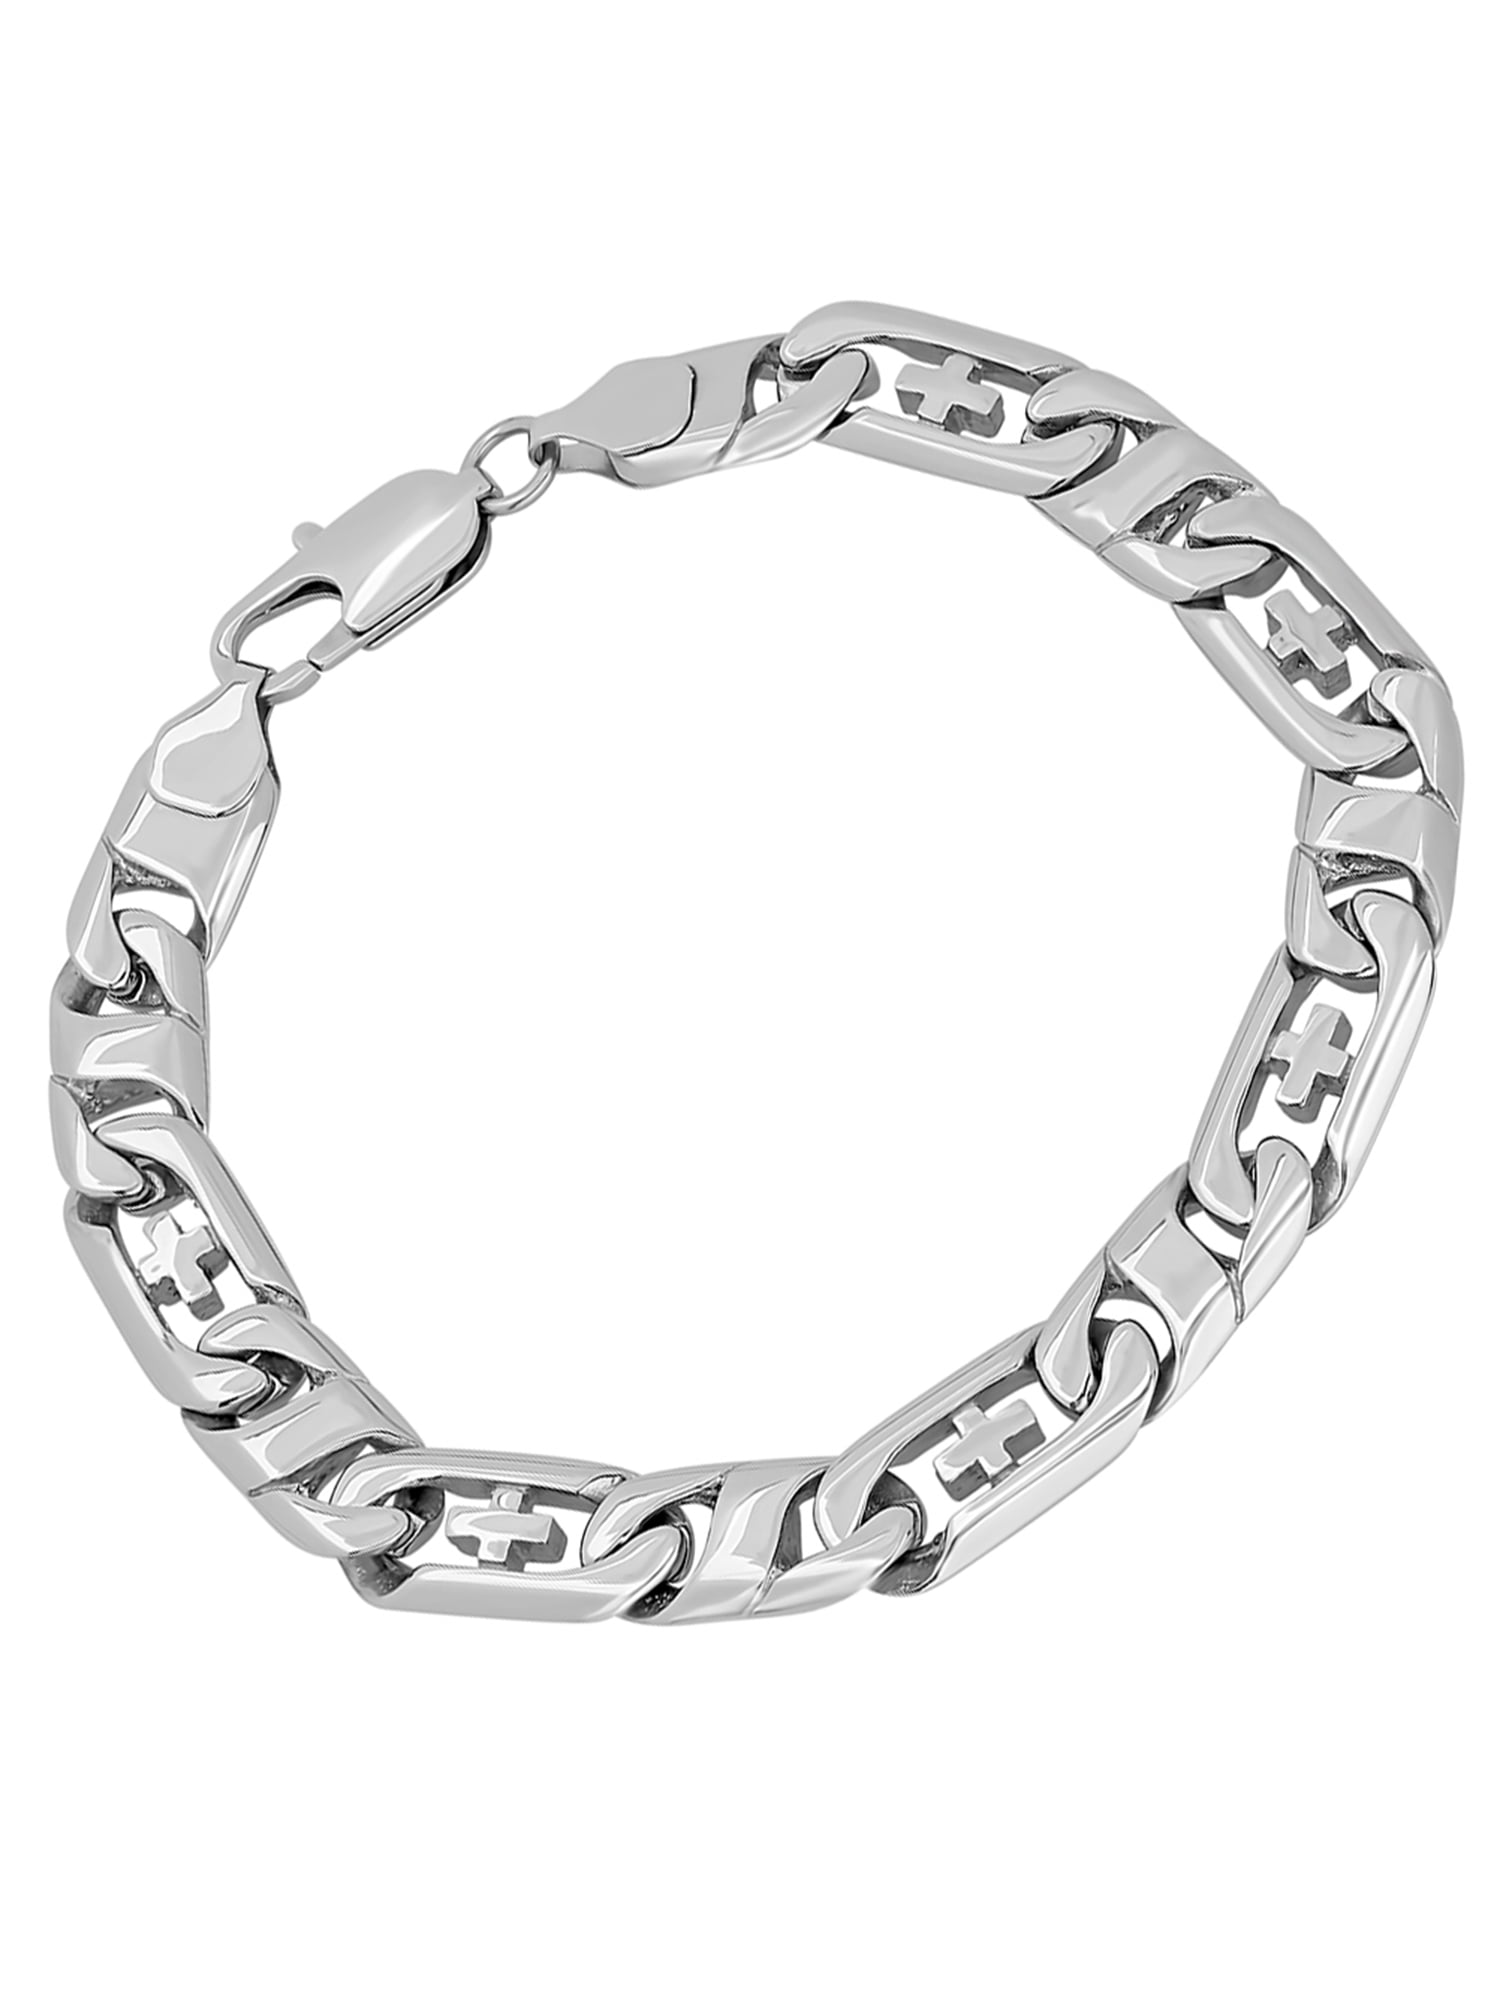 Stainless Steel Curb Bracelet, 8.5